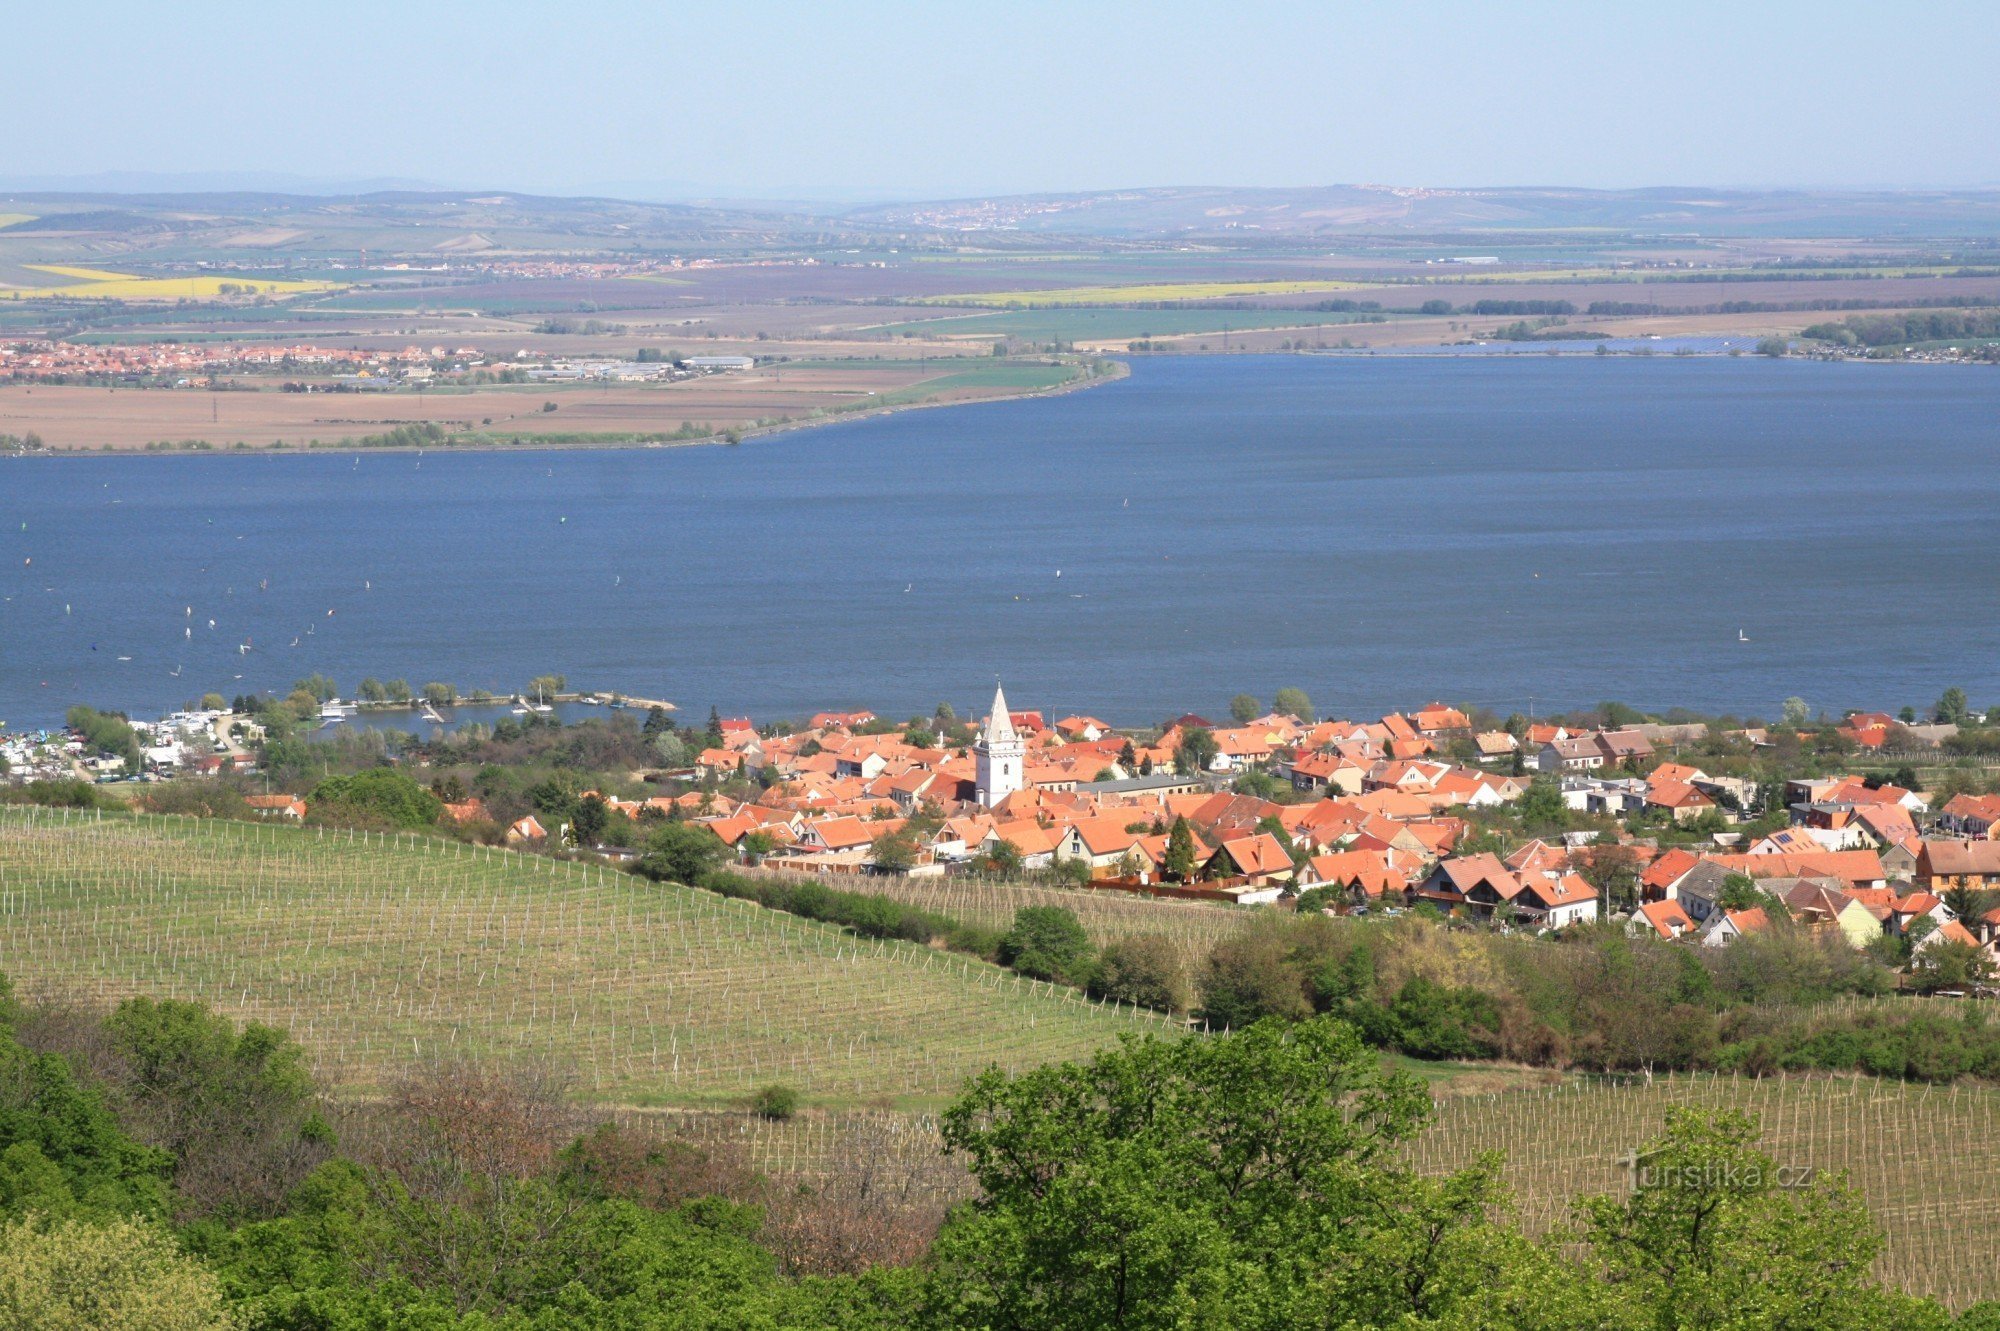 Novomlýn reservoir med landsbyen Pavlov og en campingplads